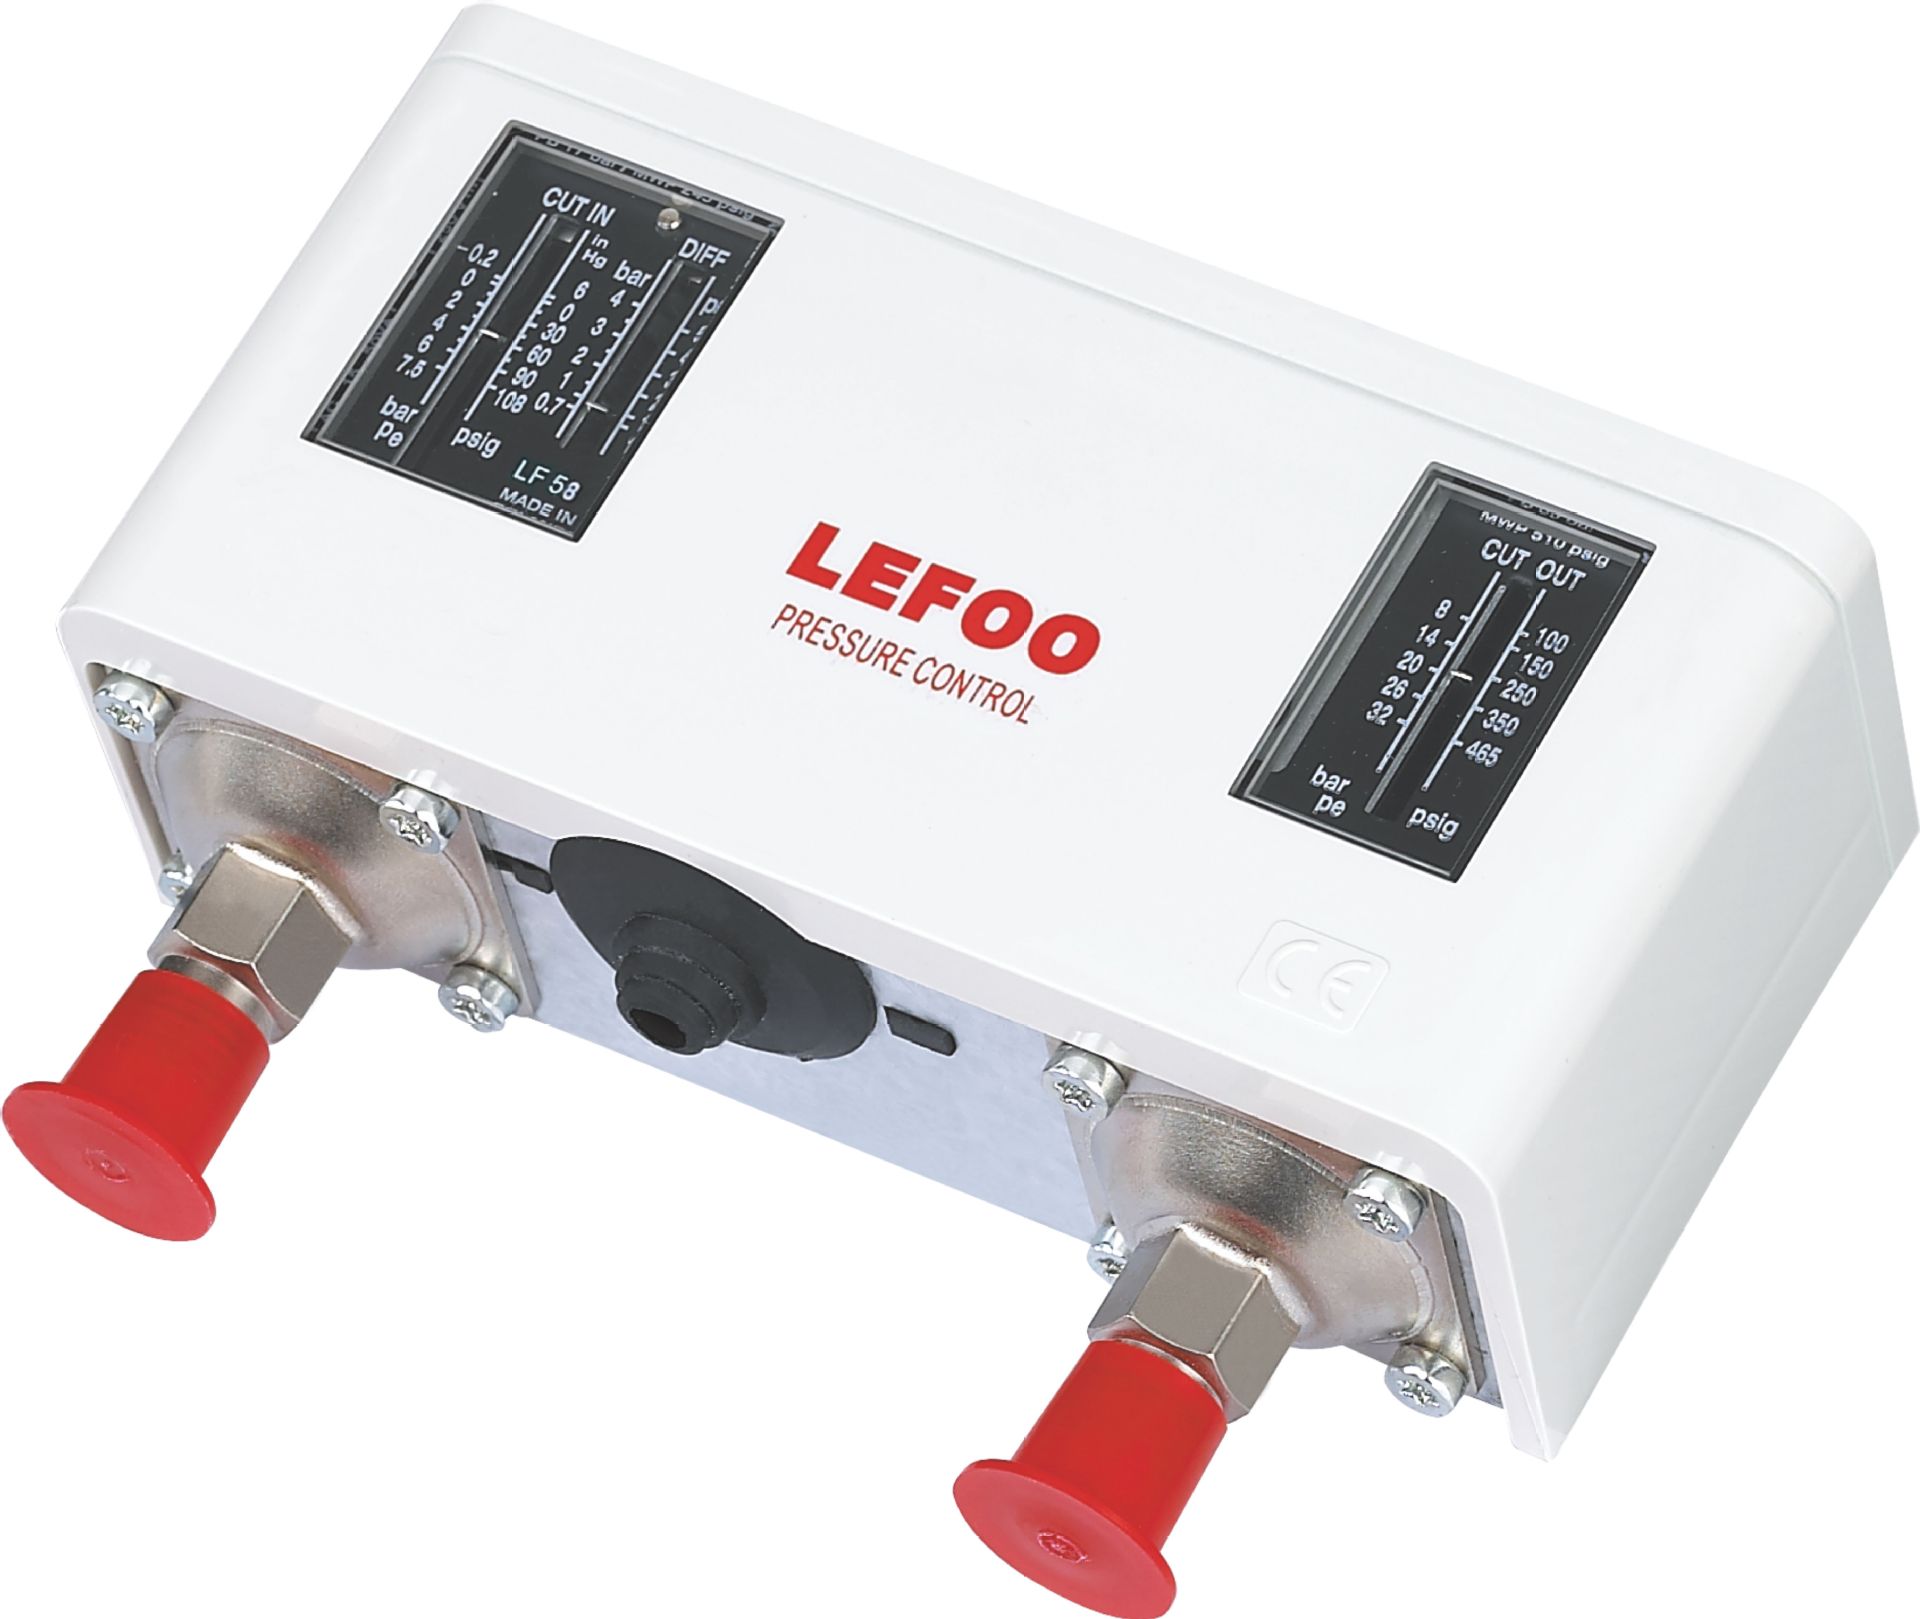 LF5532HM1 制冷系统压力开关 -0.5~42bar 制冷机组专用压力控制器示例图9